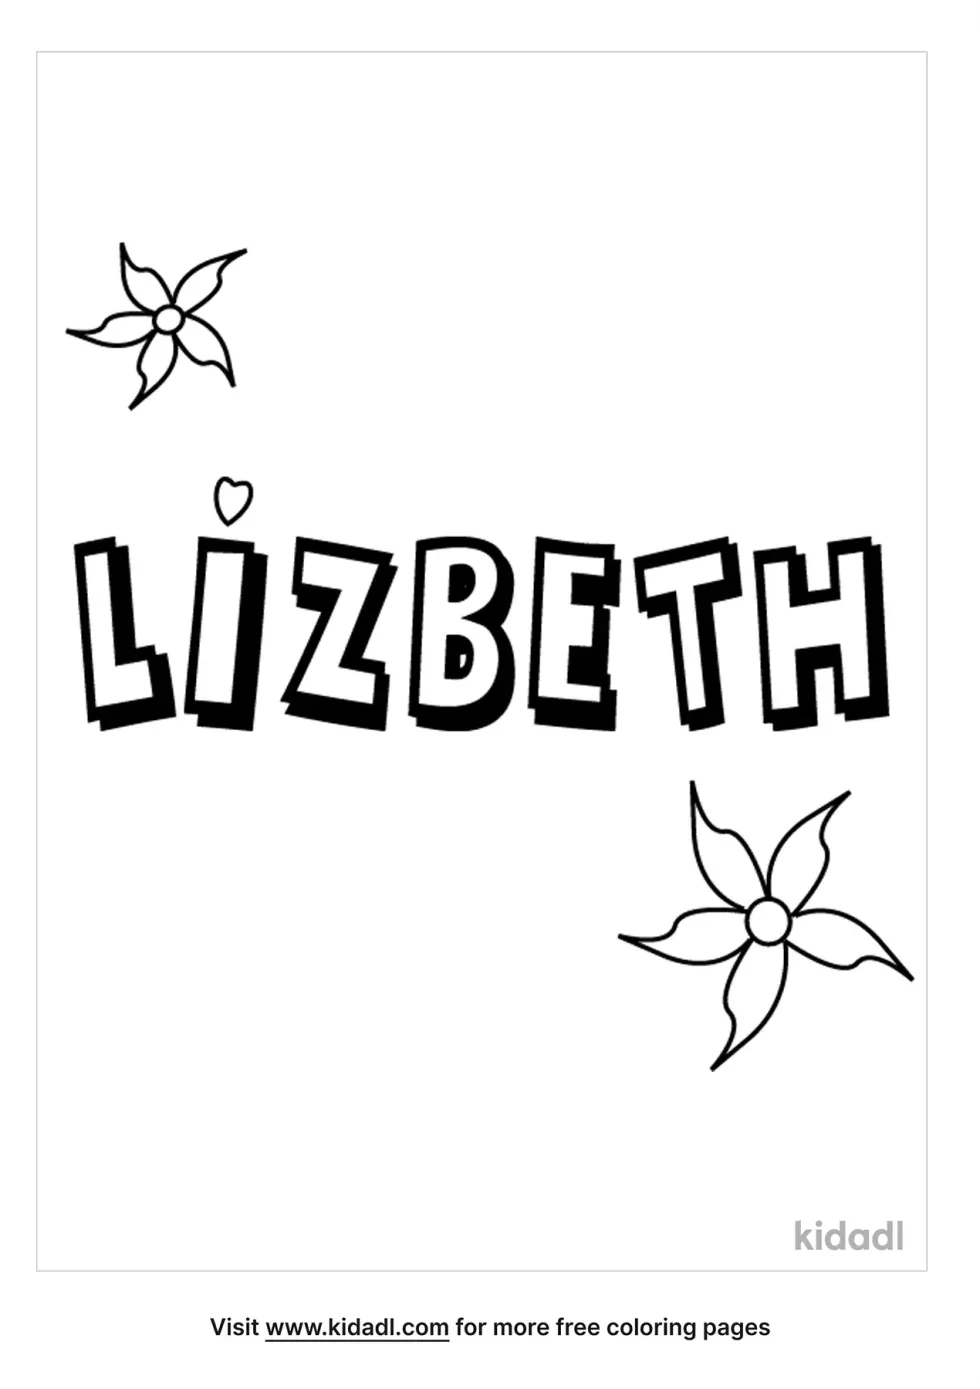 Name Lizbeth Coloring Page